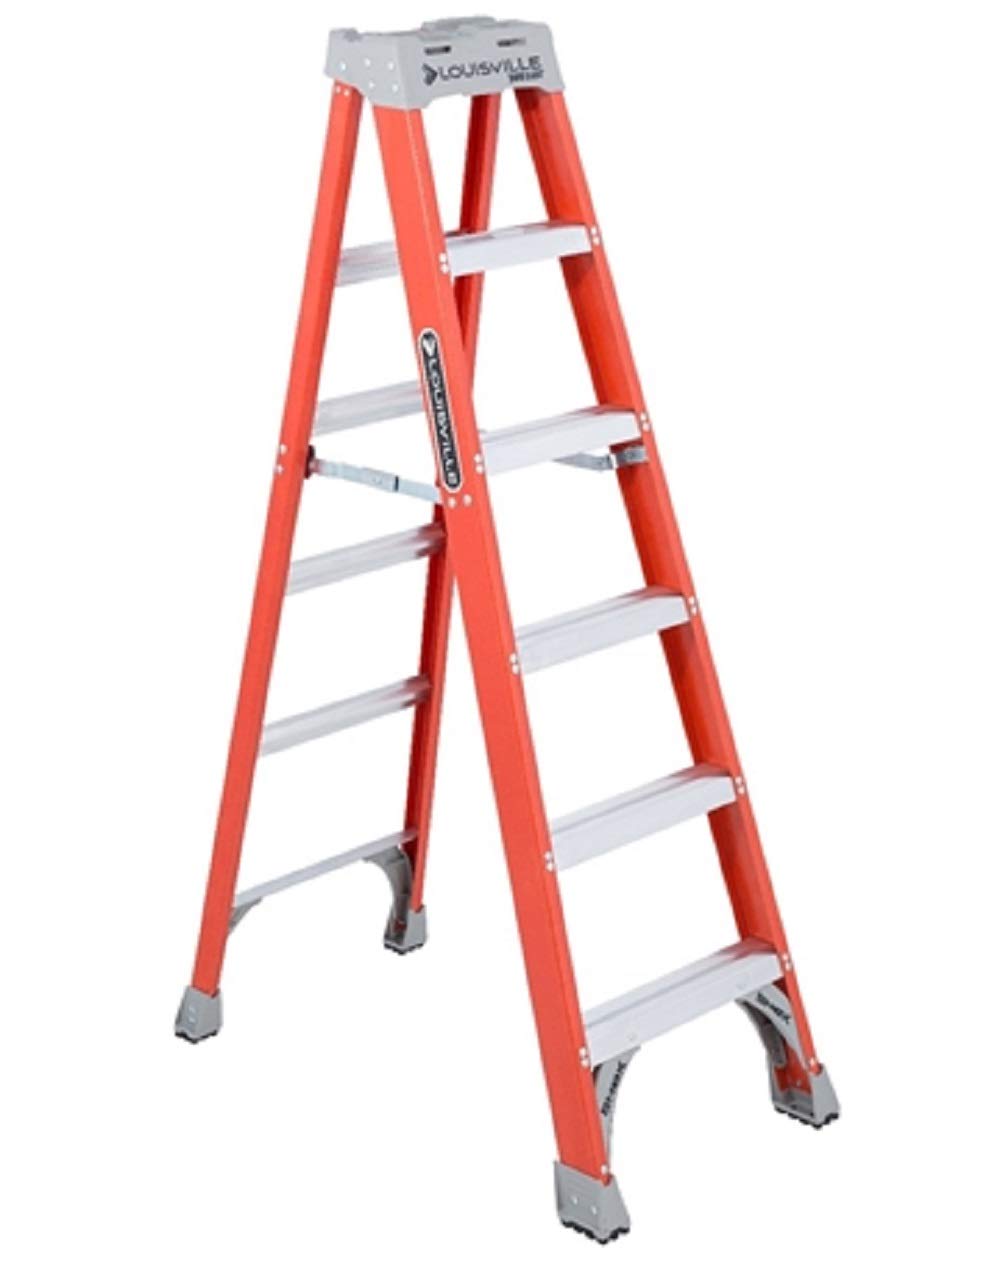 louiville ladder